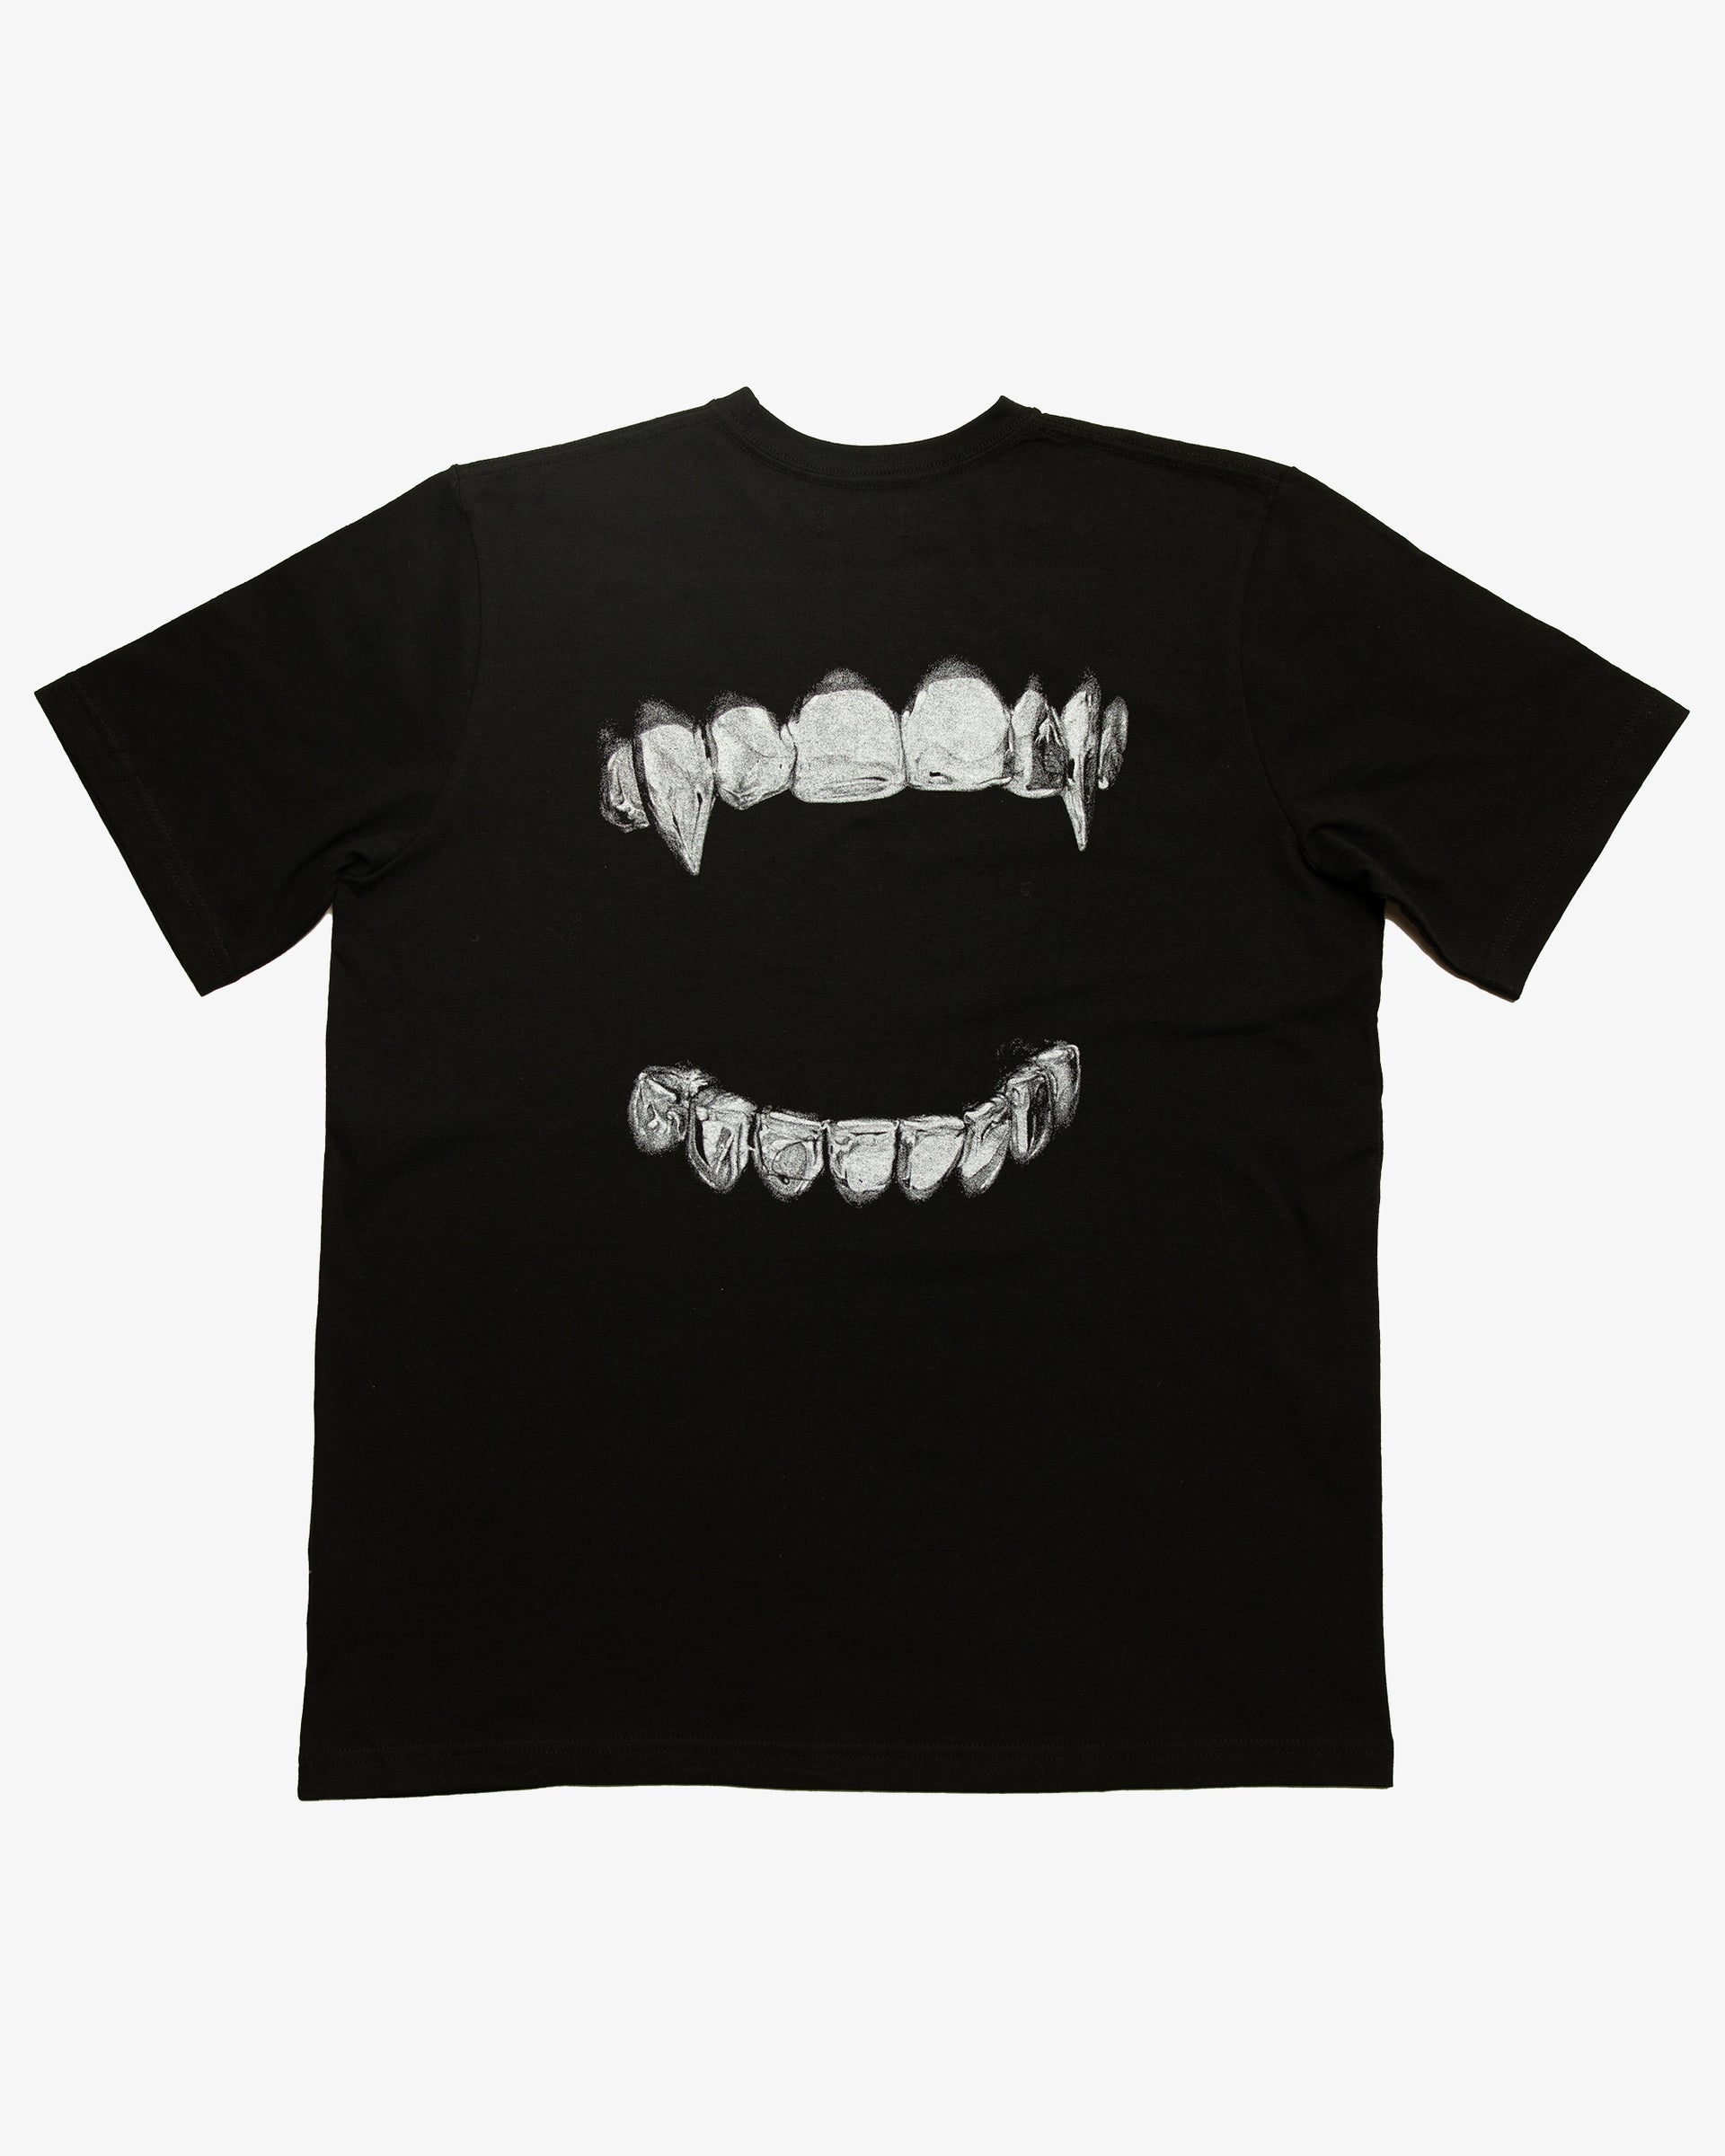 Grrrillz T-Shirt - Black